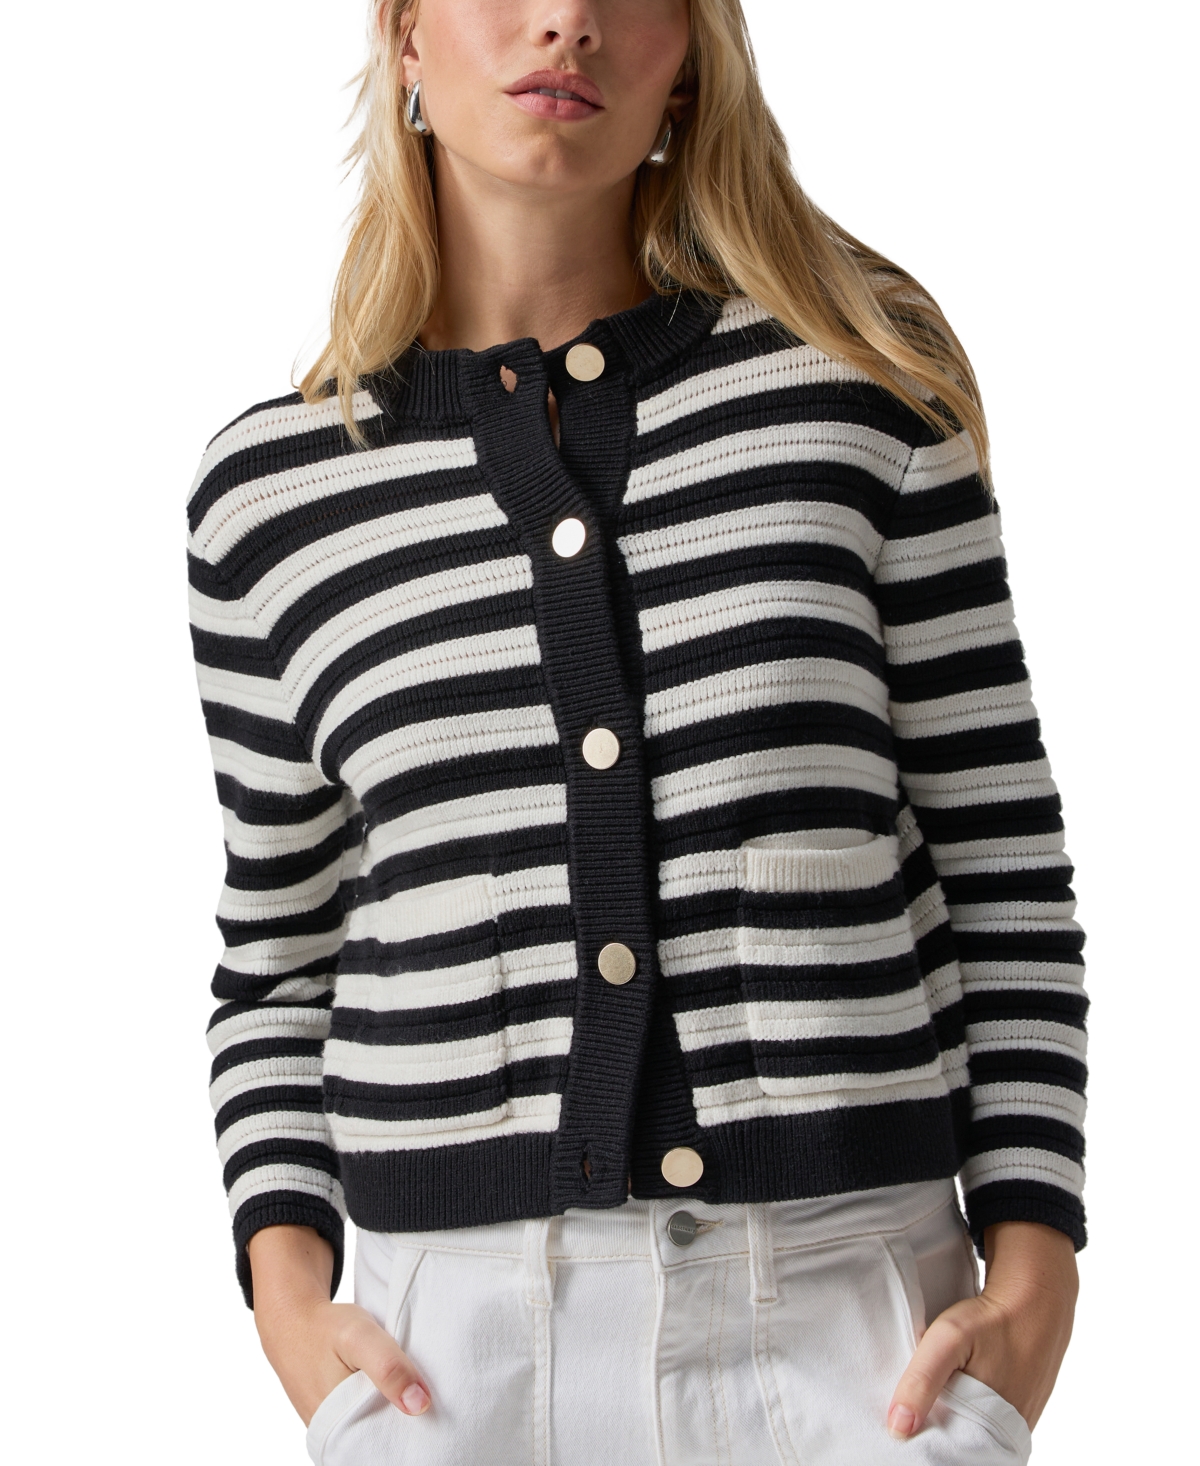 Women's Striped Sweater Jacket - CHALK AND BLACK STRIPE